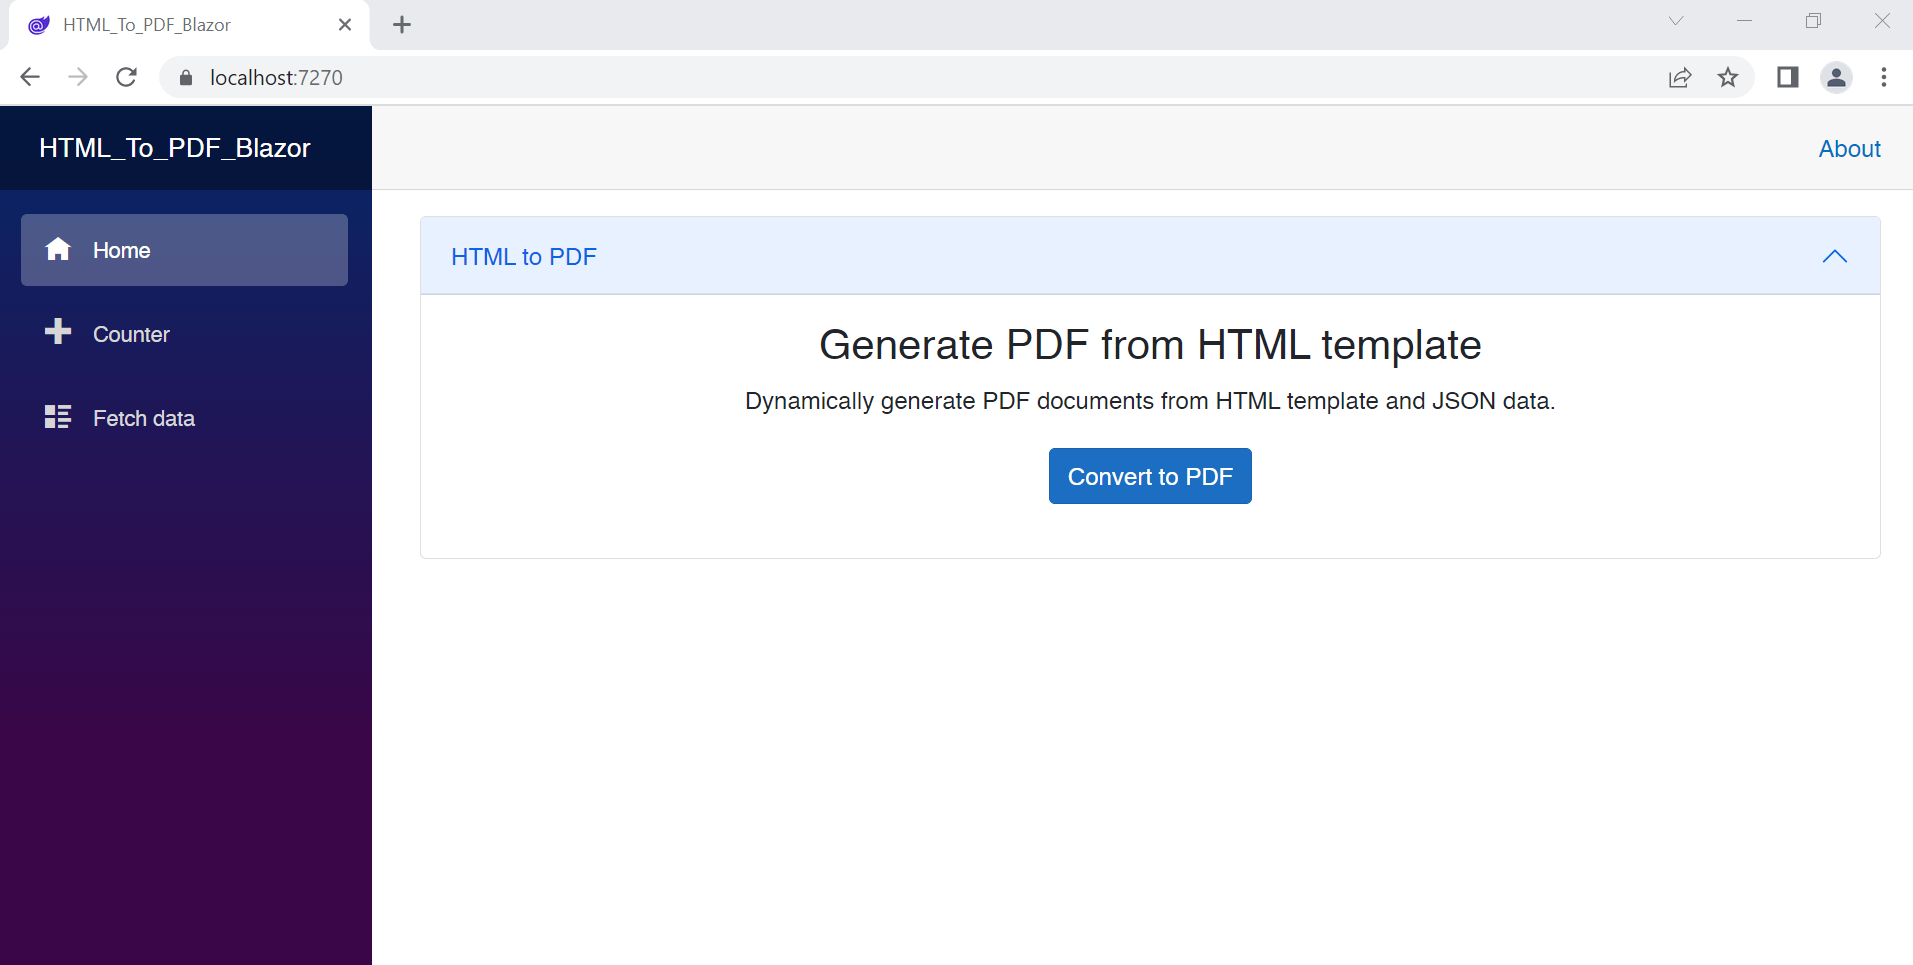 Blazor WebAssembly HTML-to-PDF conversion app